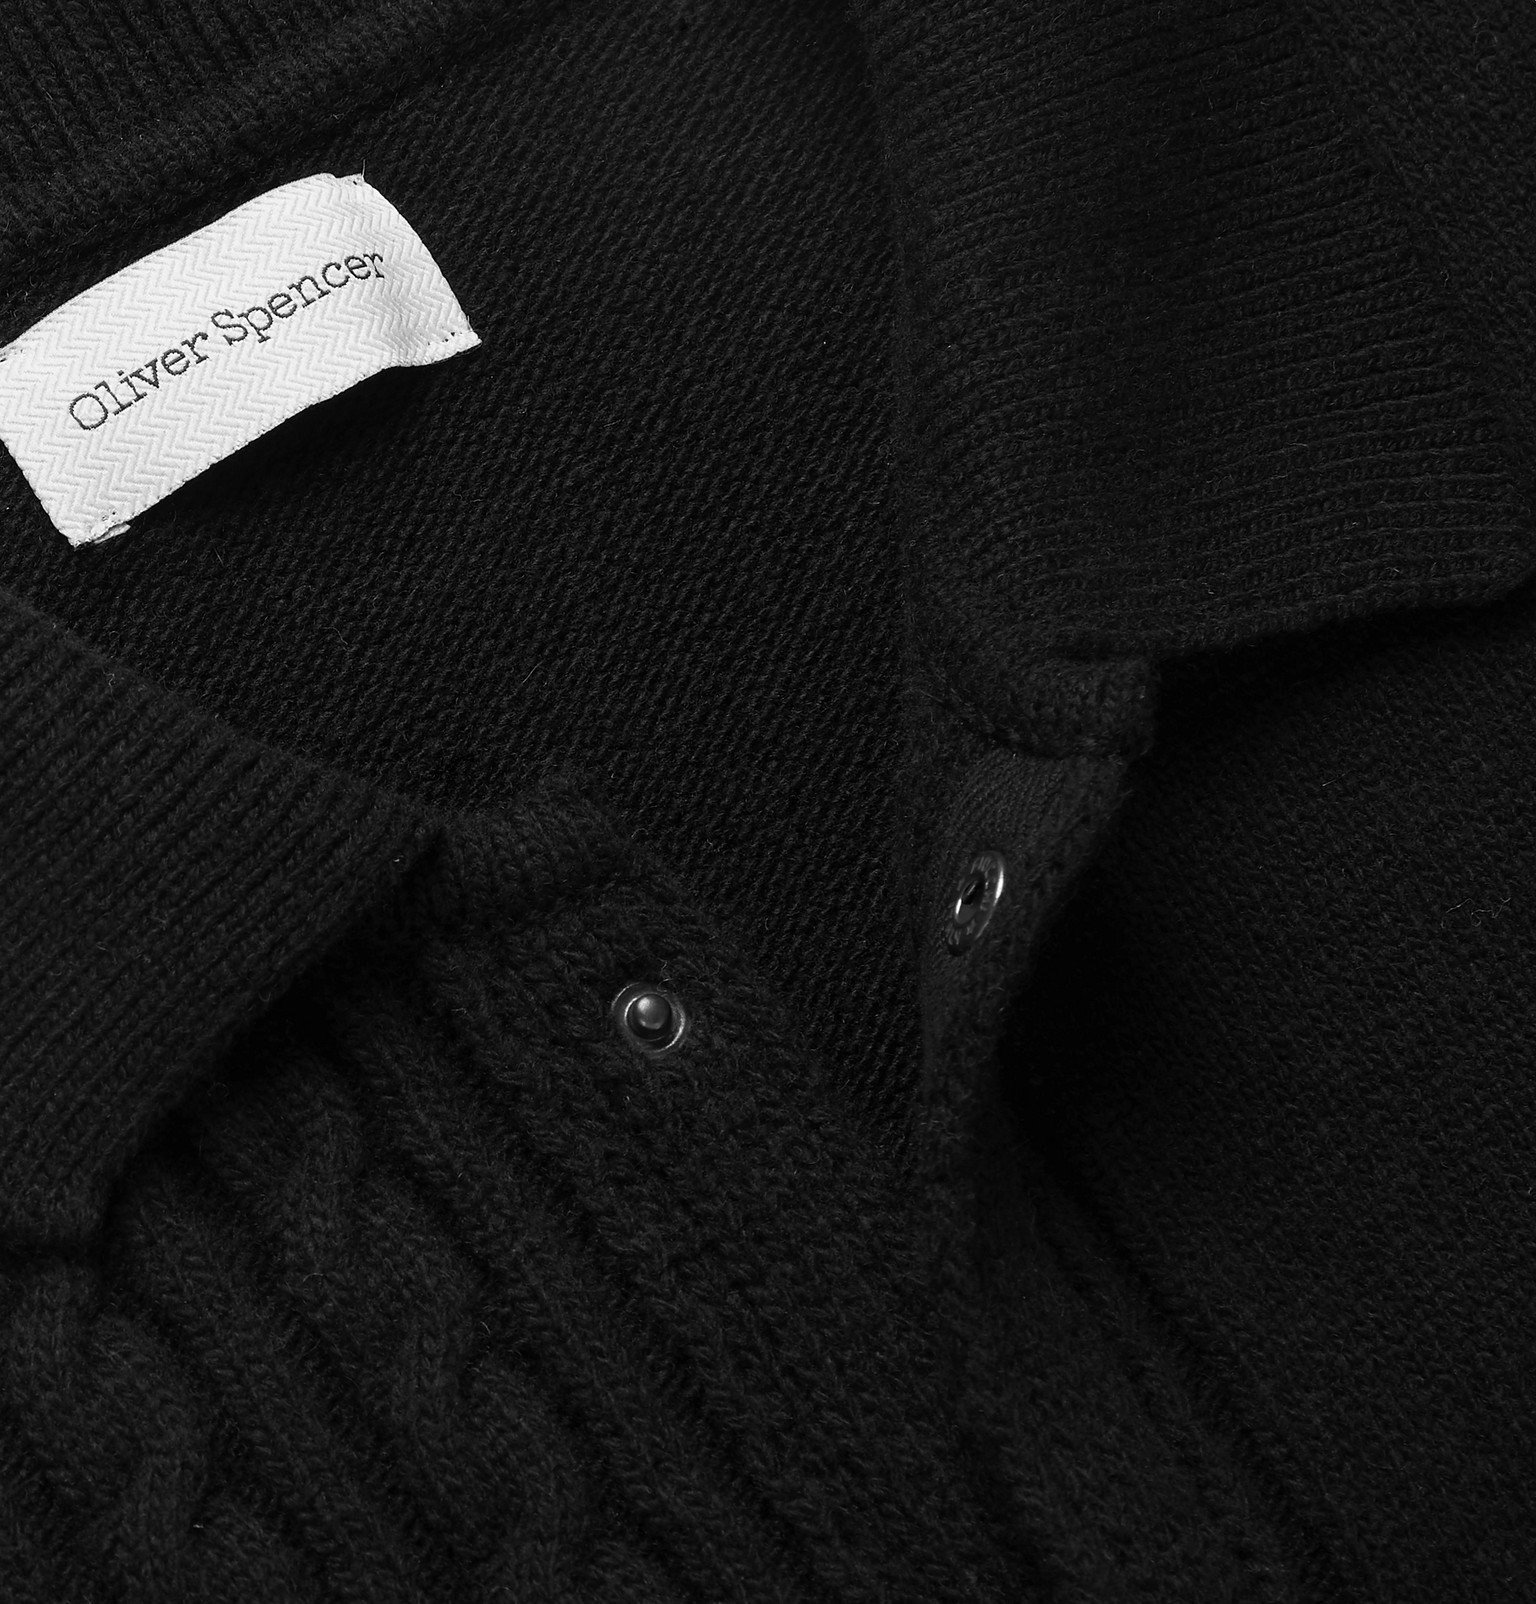 Oliver Spencer - Panelled Cable-Knit Wool Cardigan - Black